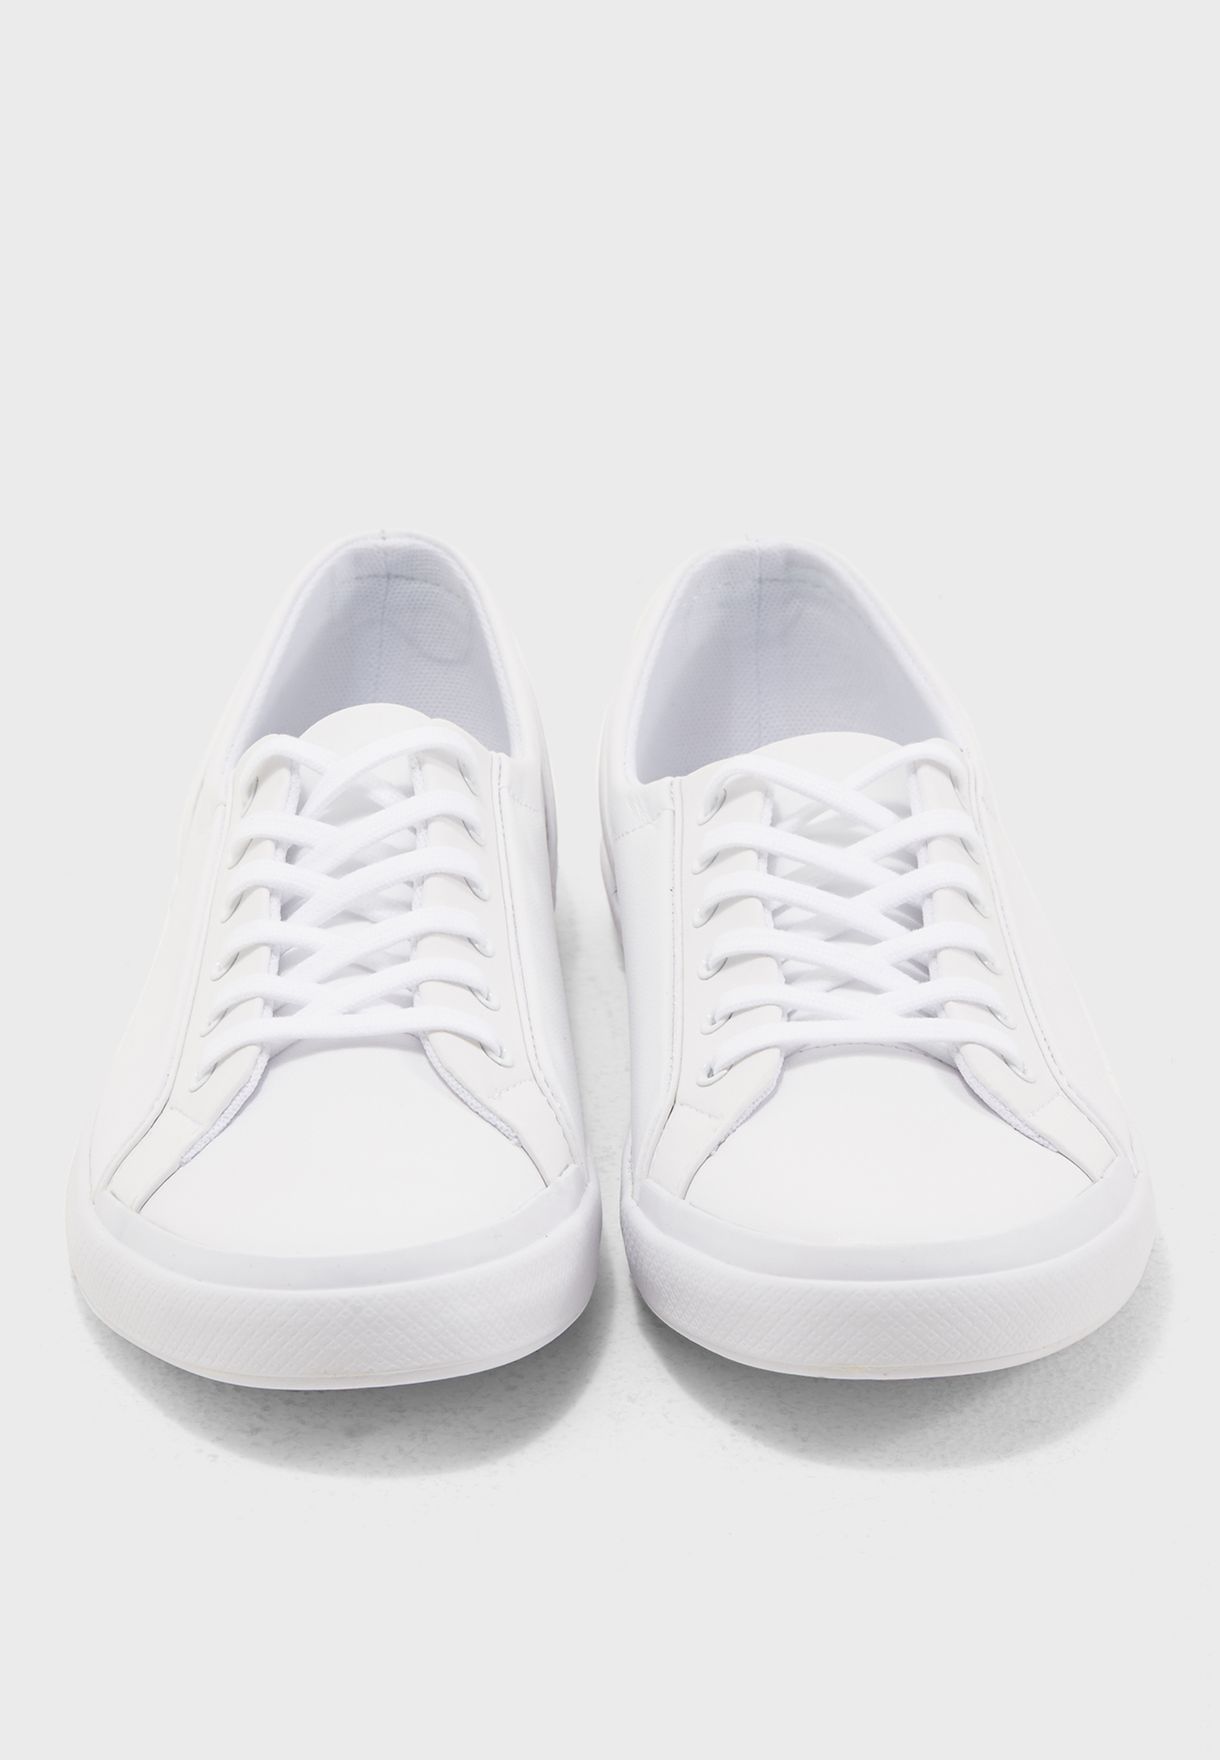 lacoste lancelle bl 1 white sneaker